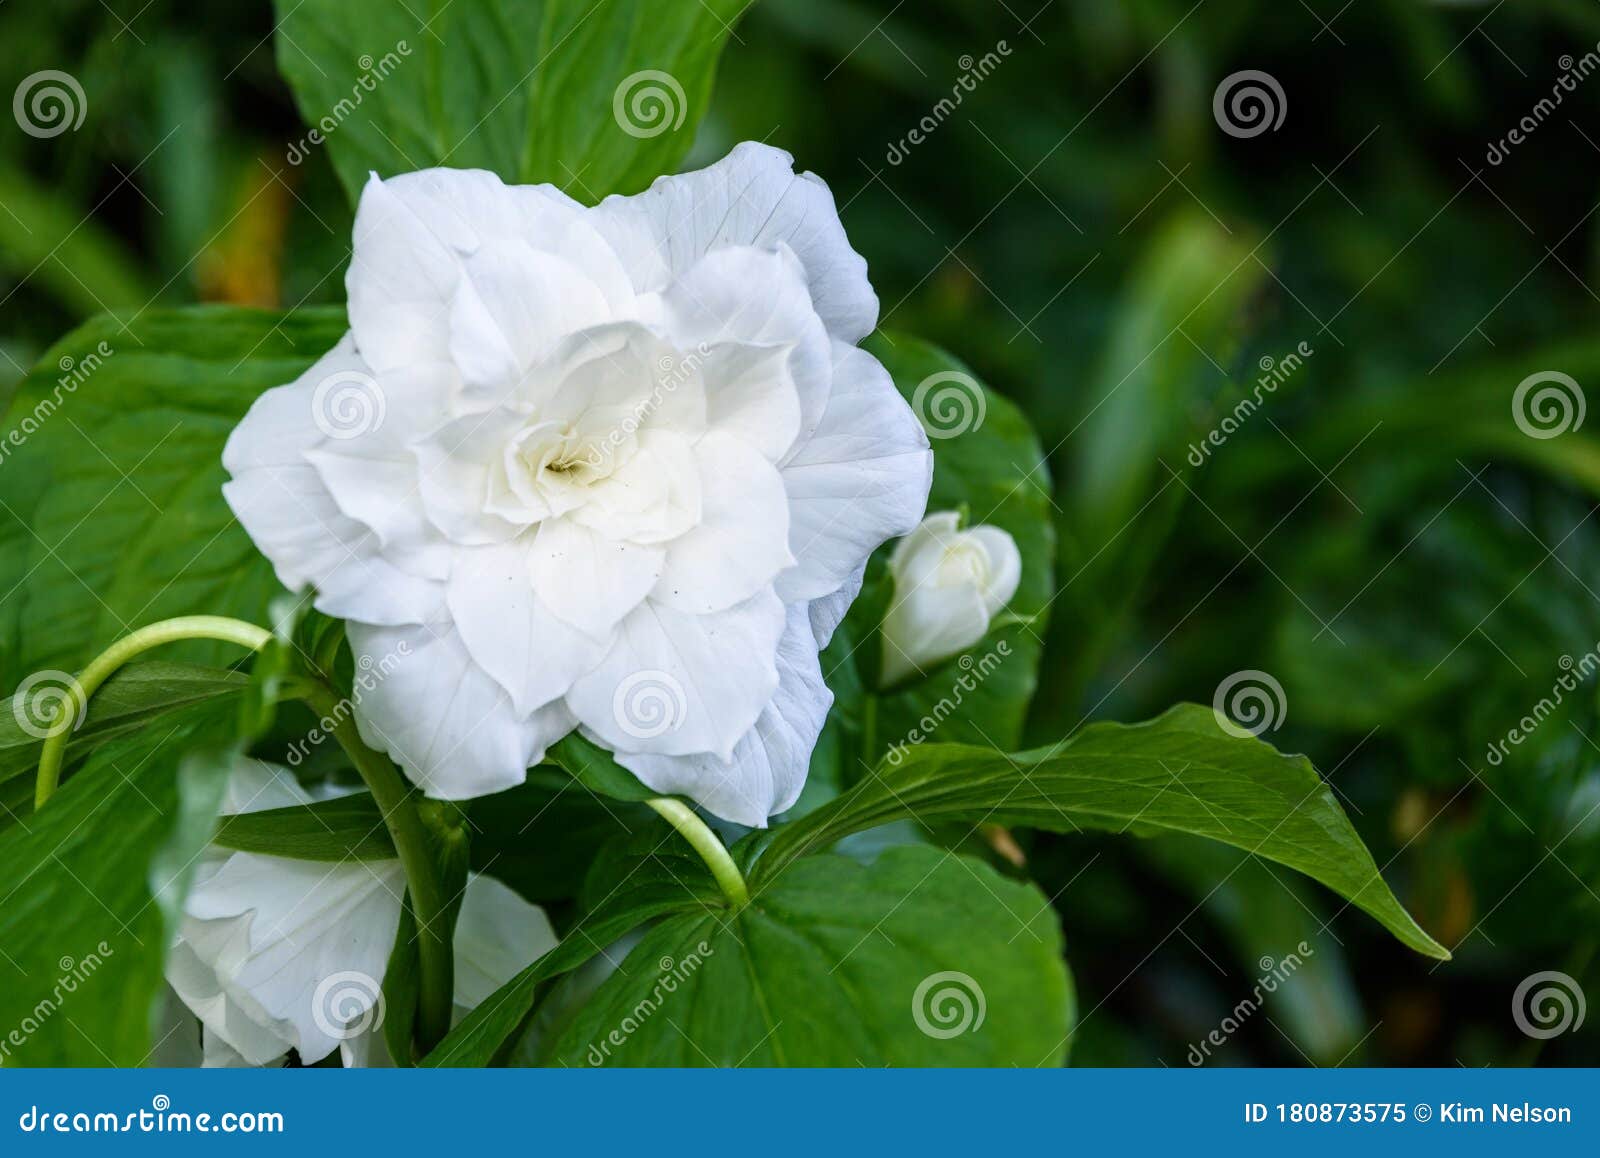 great white trillium, trillium grandiflorum `flore pleno`, blooming in a garden